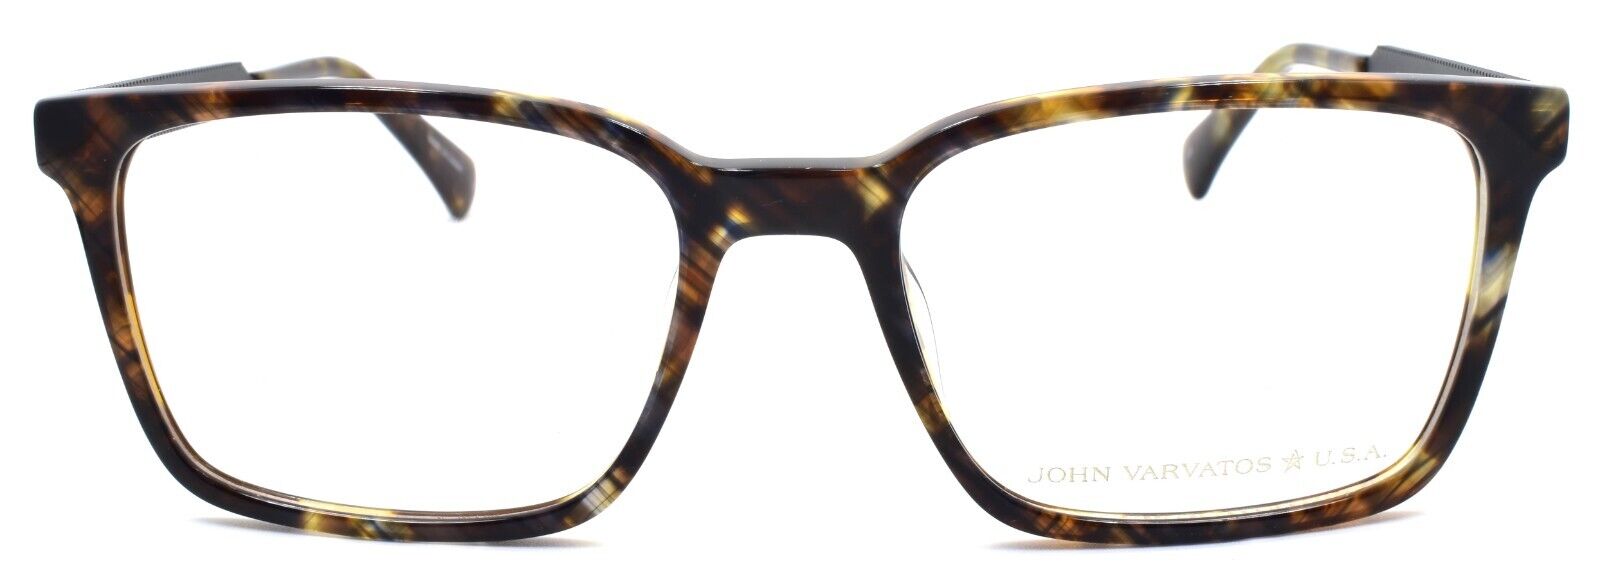 2-John Varvatos VJVC004 Men's Eyeglasses Frames 53-18-145 Brown-751286356137-IKSpecs